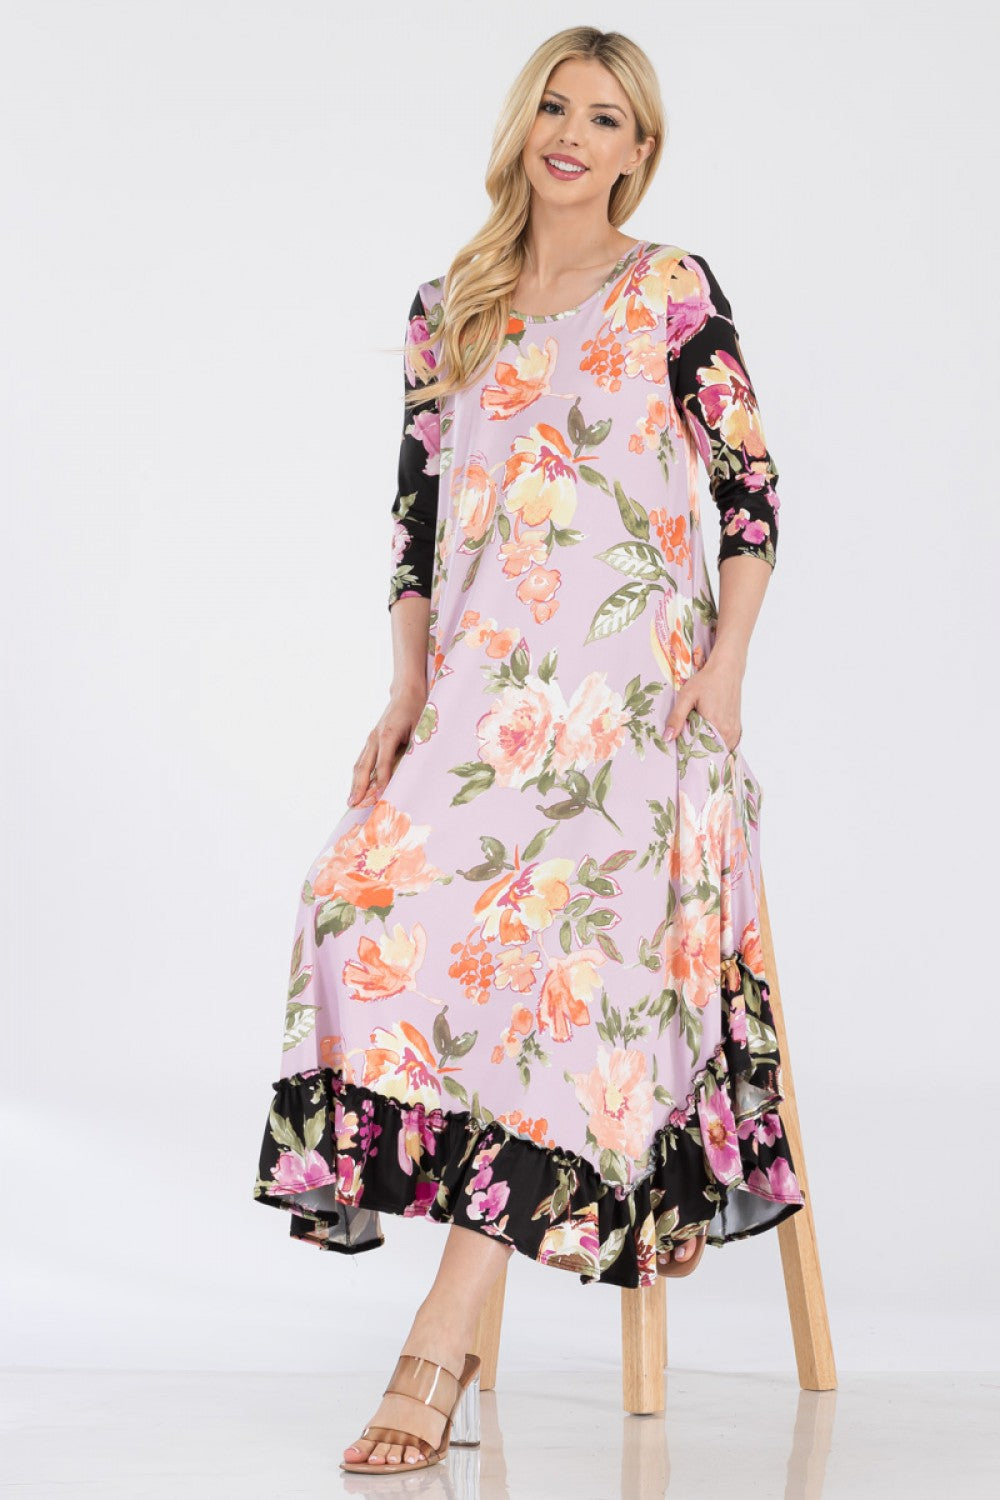 Jeannie Dress- Mauve Floral Print Dress